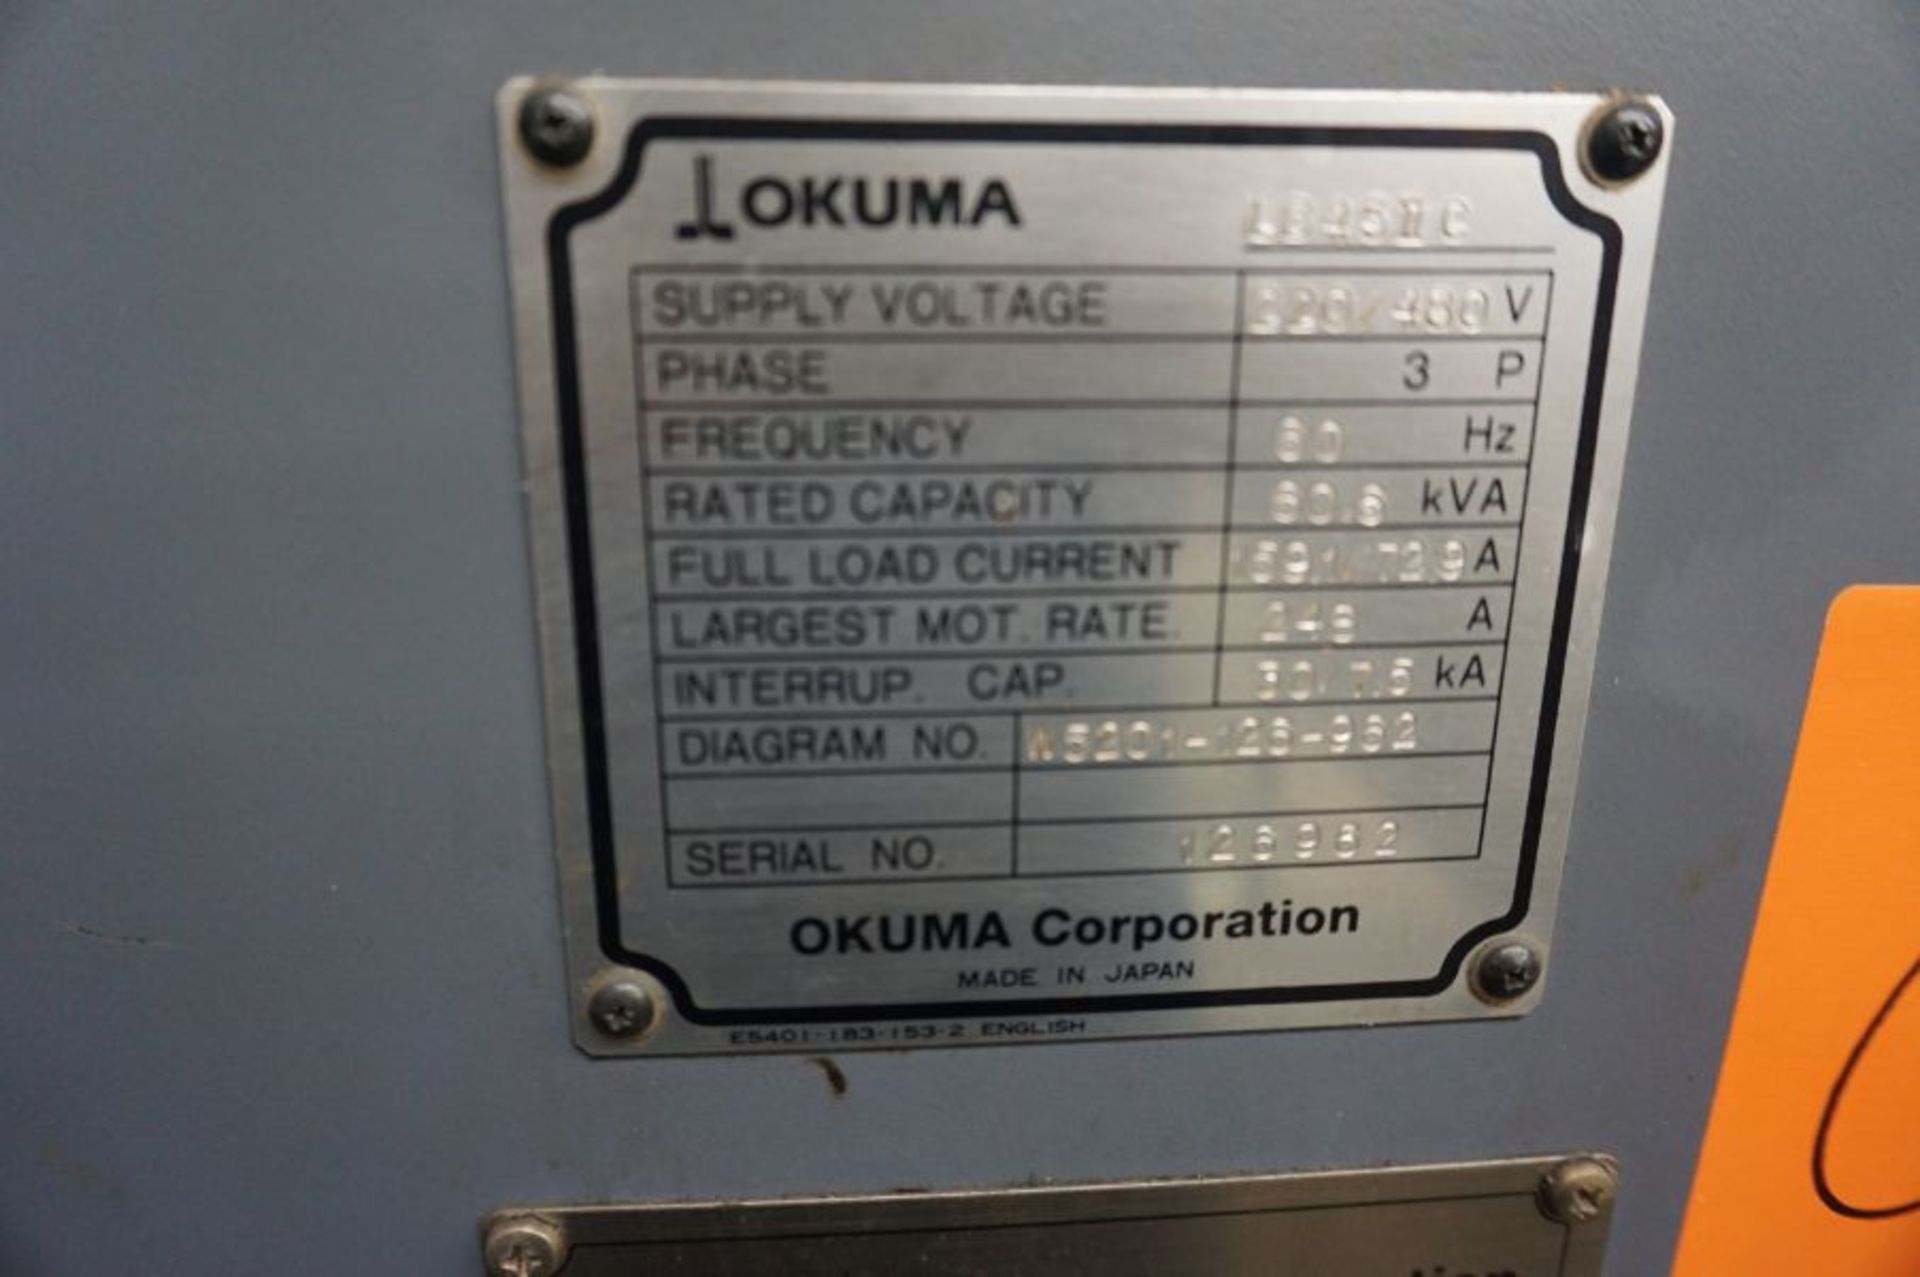 Okuma LB45IIC 3000, OSP-P200L Control, 10" Bore, 25" Hydraulic 3 Jaw Chuck, 120" Centers - Image 11 of 14